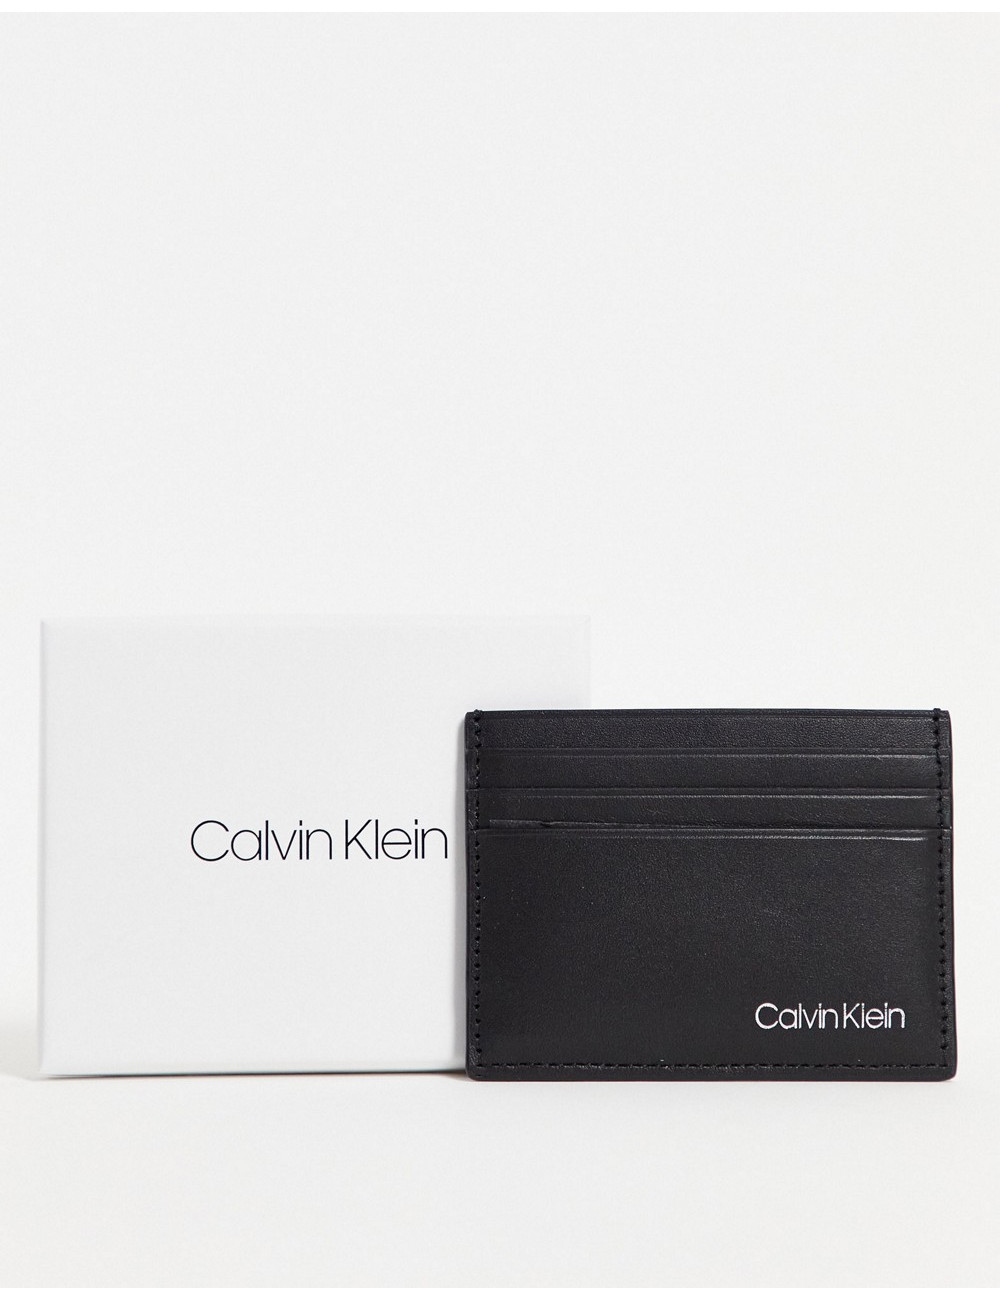 Calvin Klein leather...